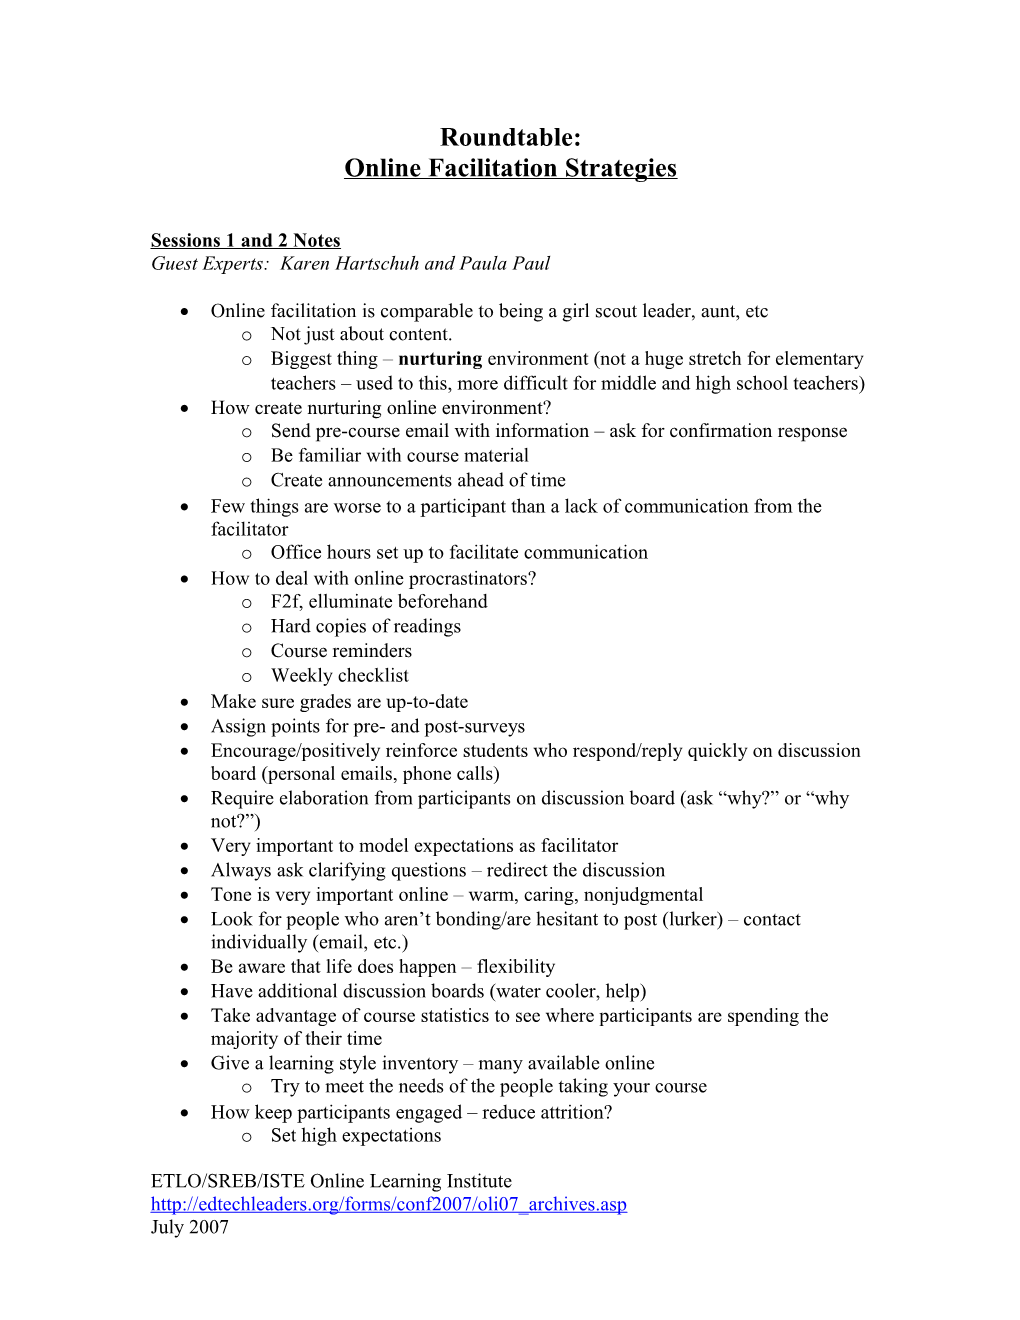 Roundtable 3: Online Facilitation Strategies